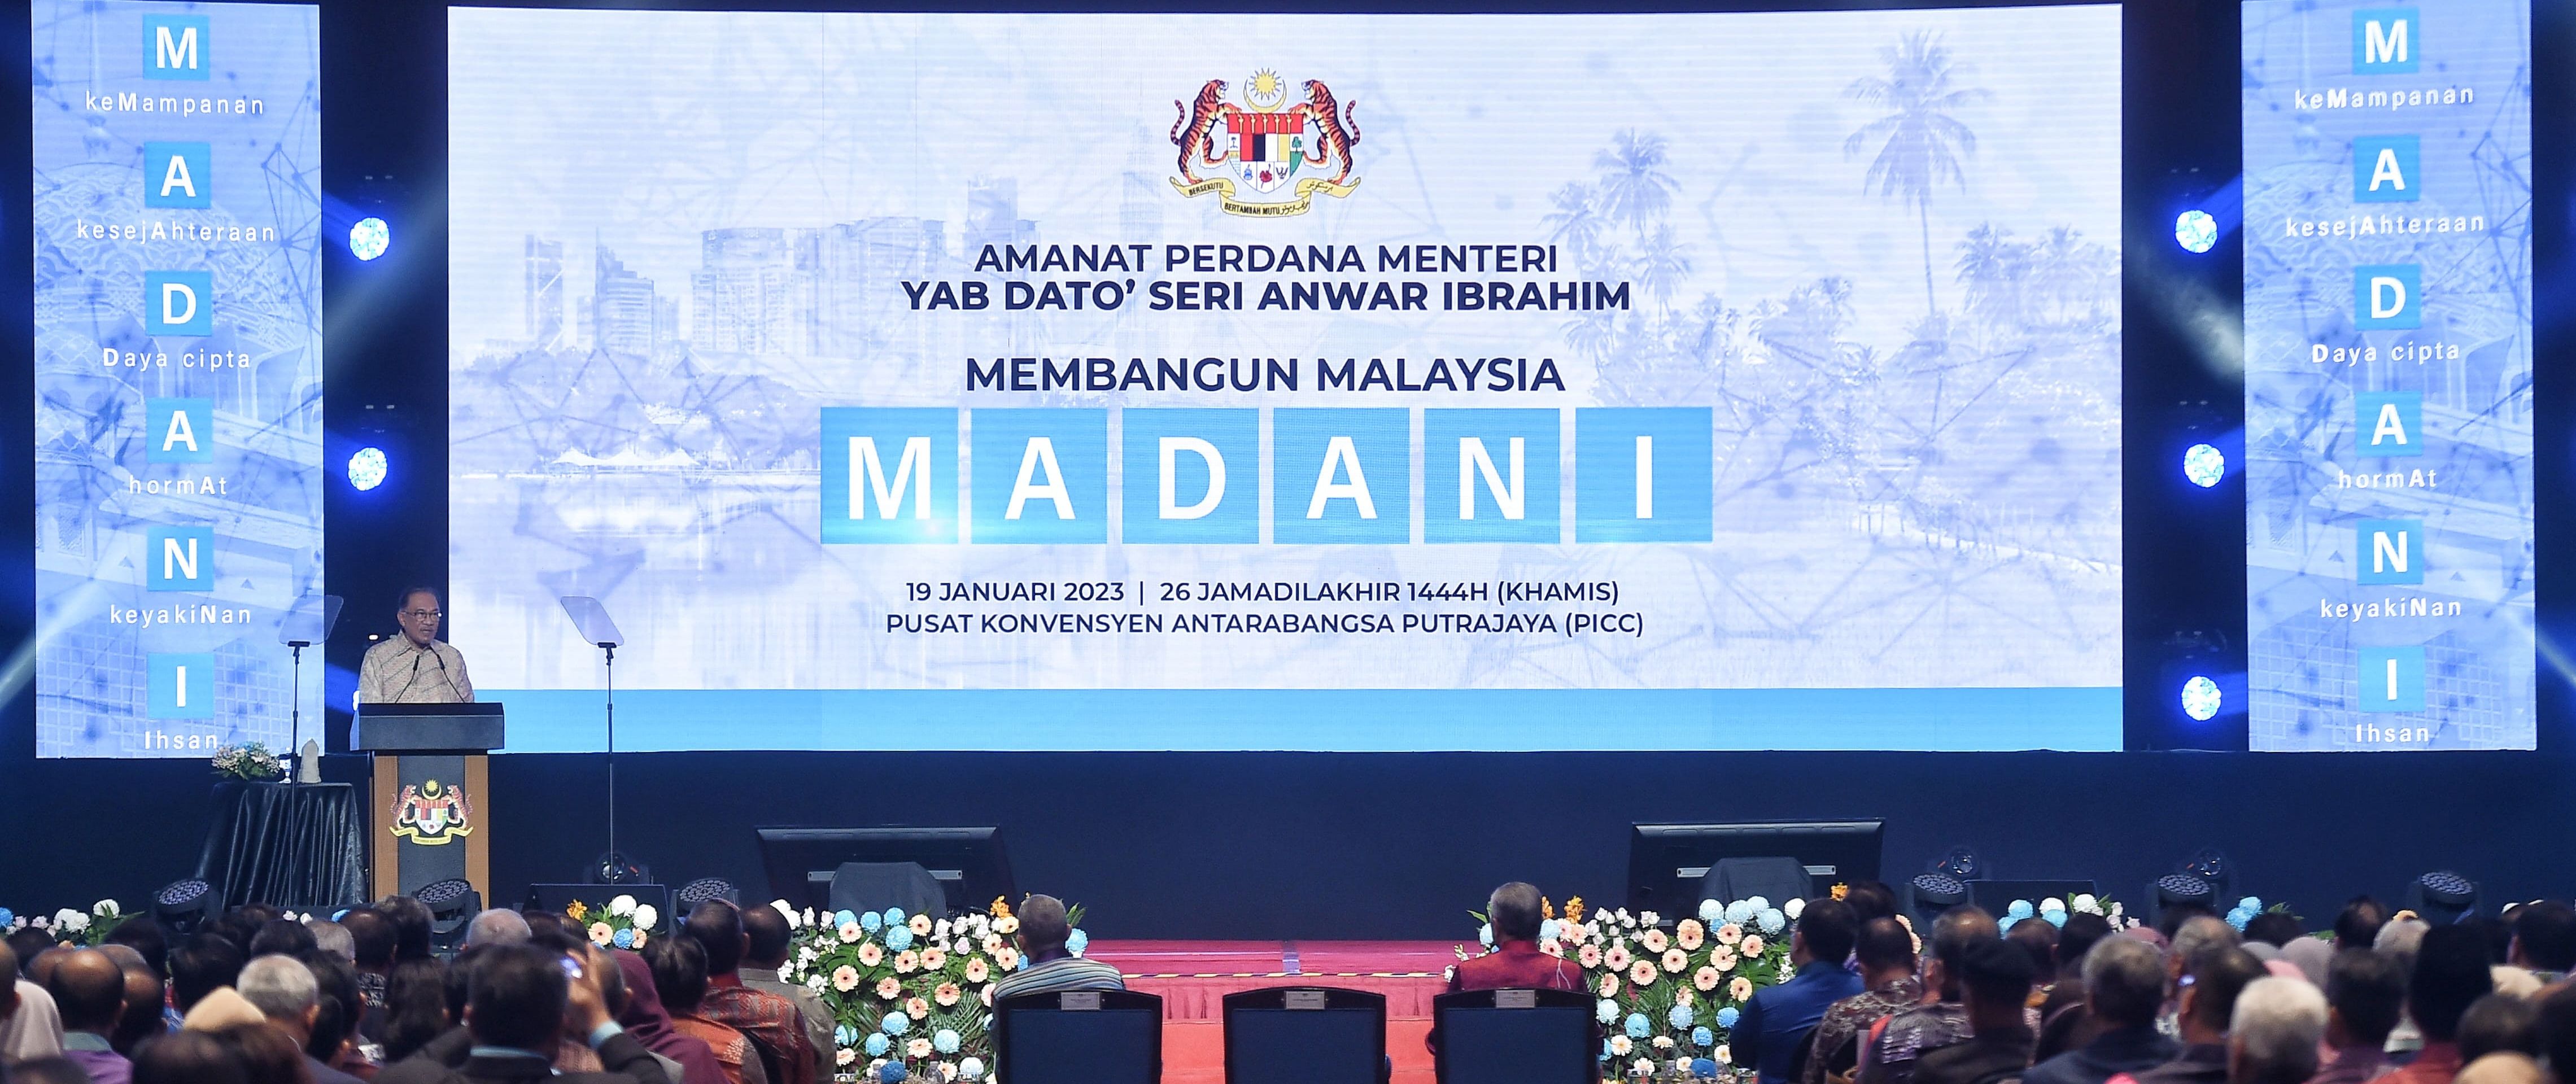 Malaysia Madani: Haluan Baharu Pembangunan Negara